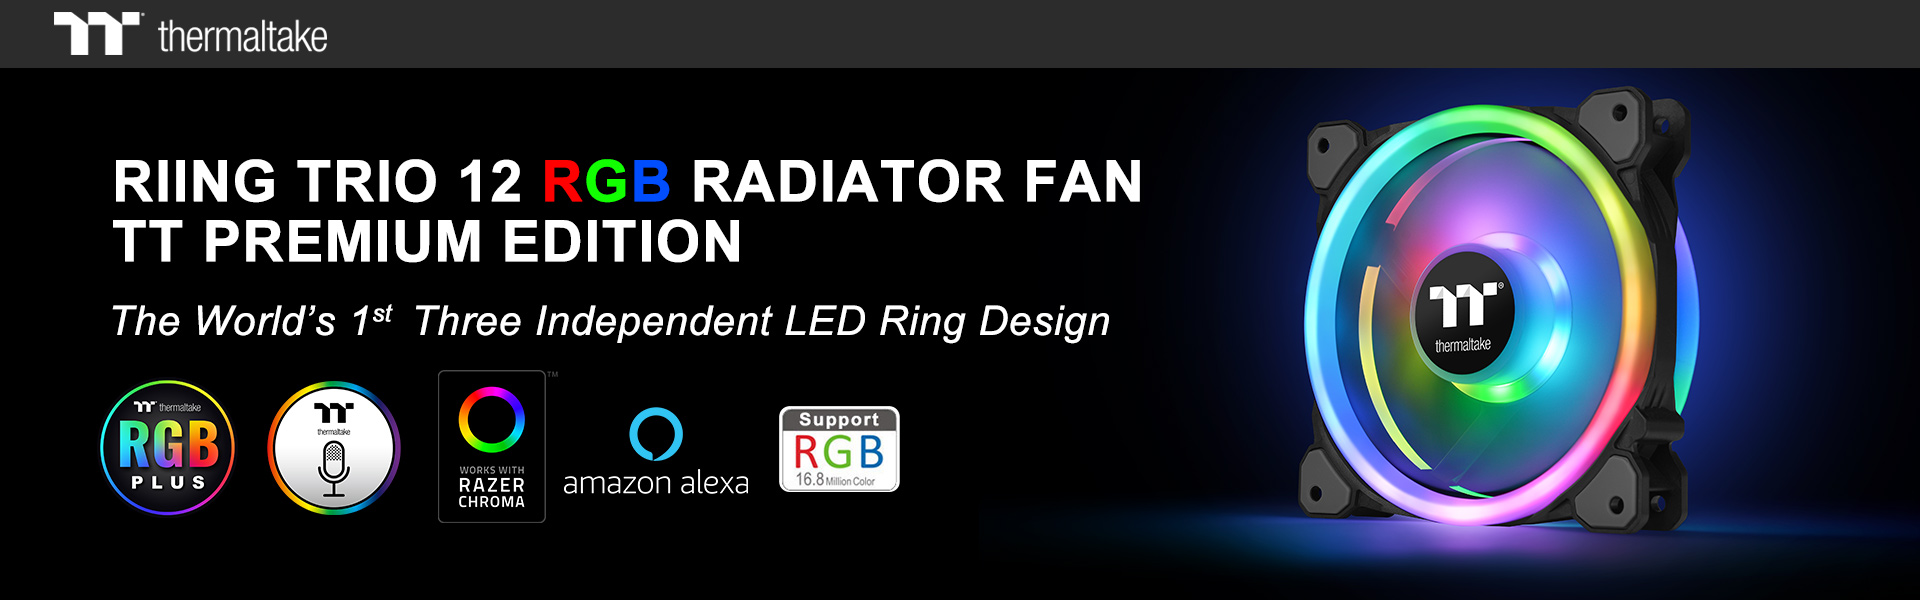 Thermaltake Releases Riing Trio 12 RGB Radiator Fan TT Premium Edition  3